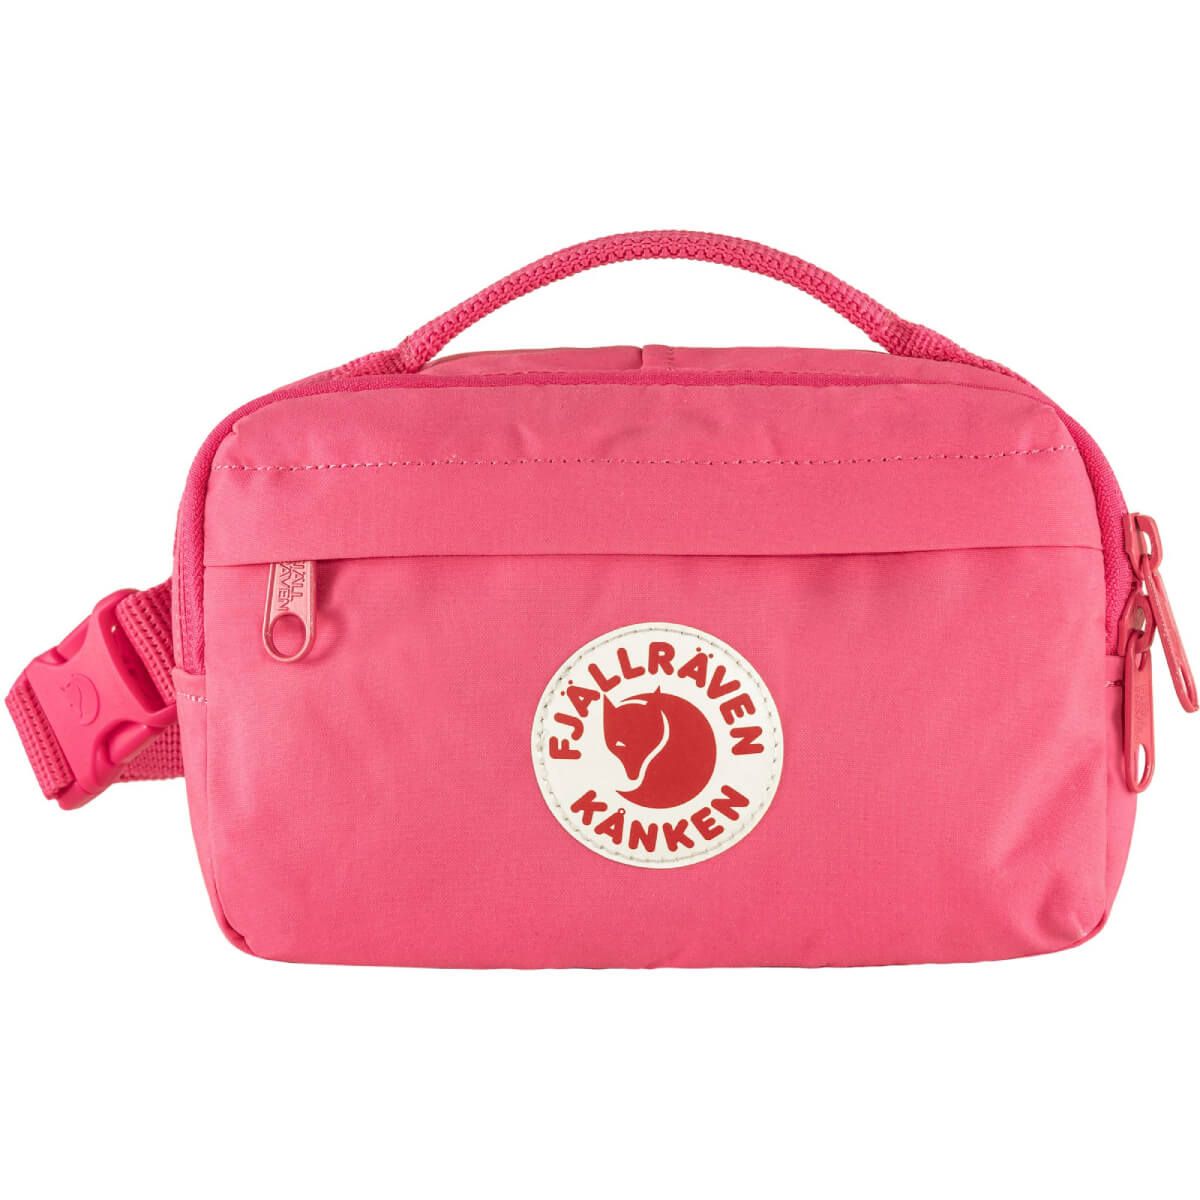 Поясная сумка Fjallraven Kanken Hip Pack Flamingo Pink 23796.450